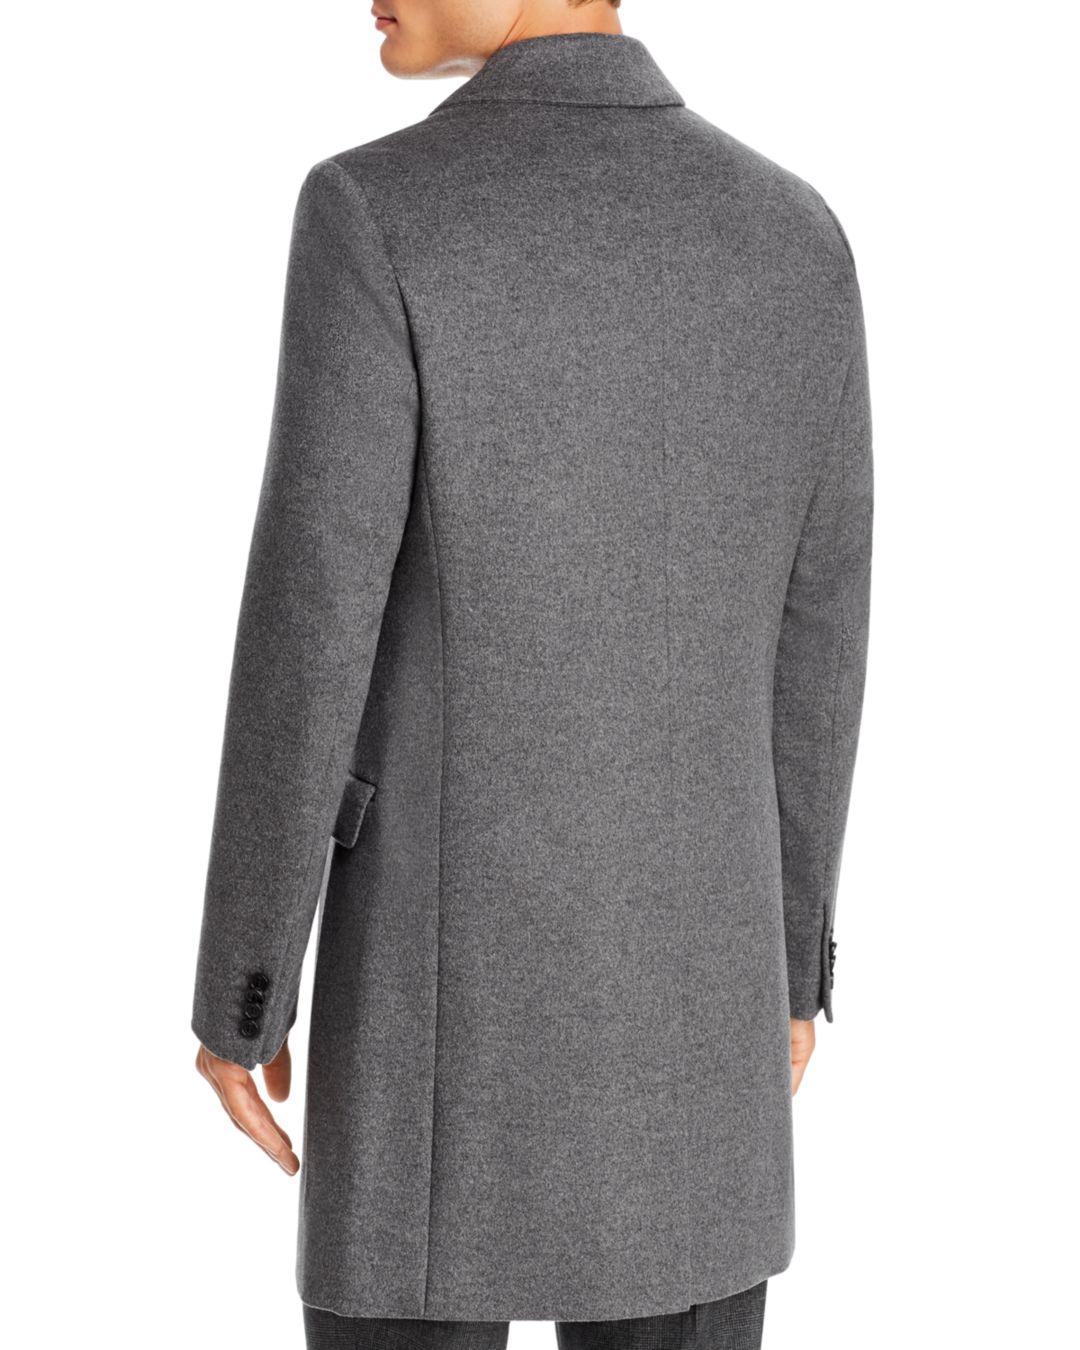 HUGO Wool Migor Slim Fit Top Coat in Gray for Men - Lyst